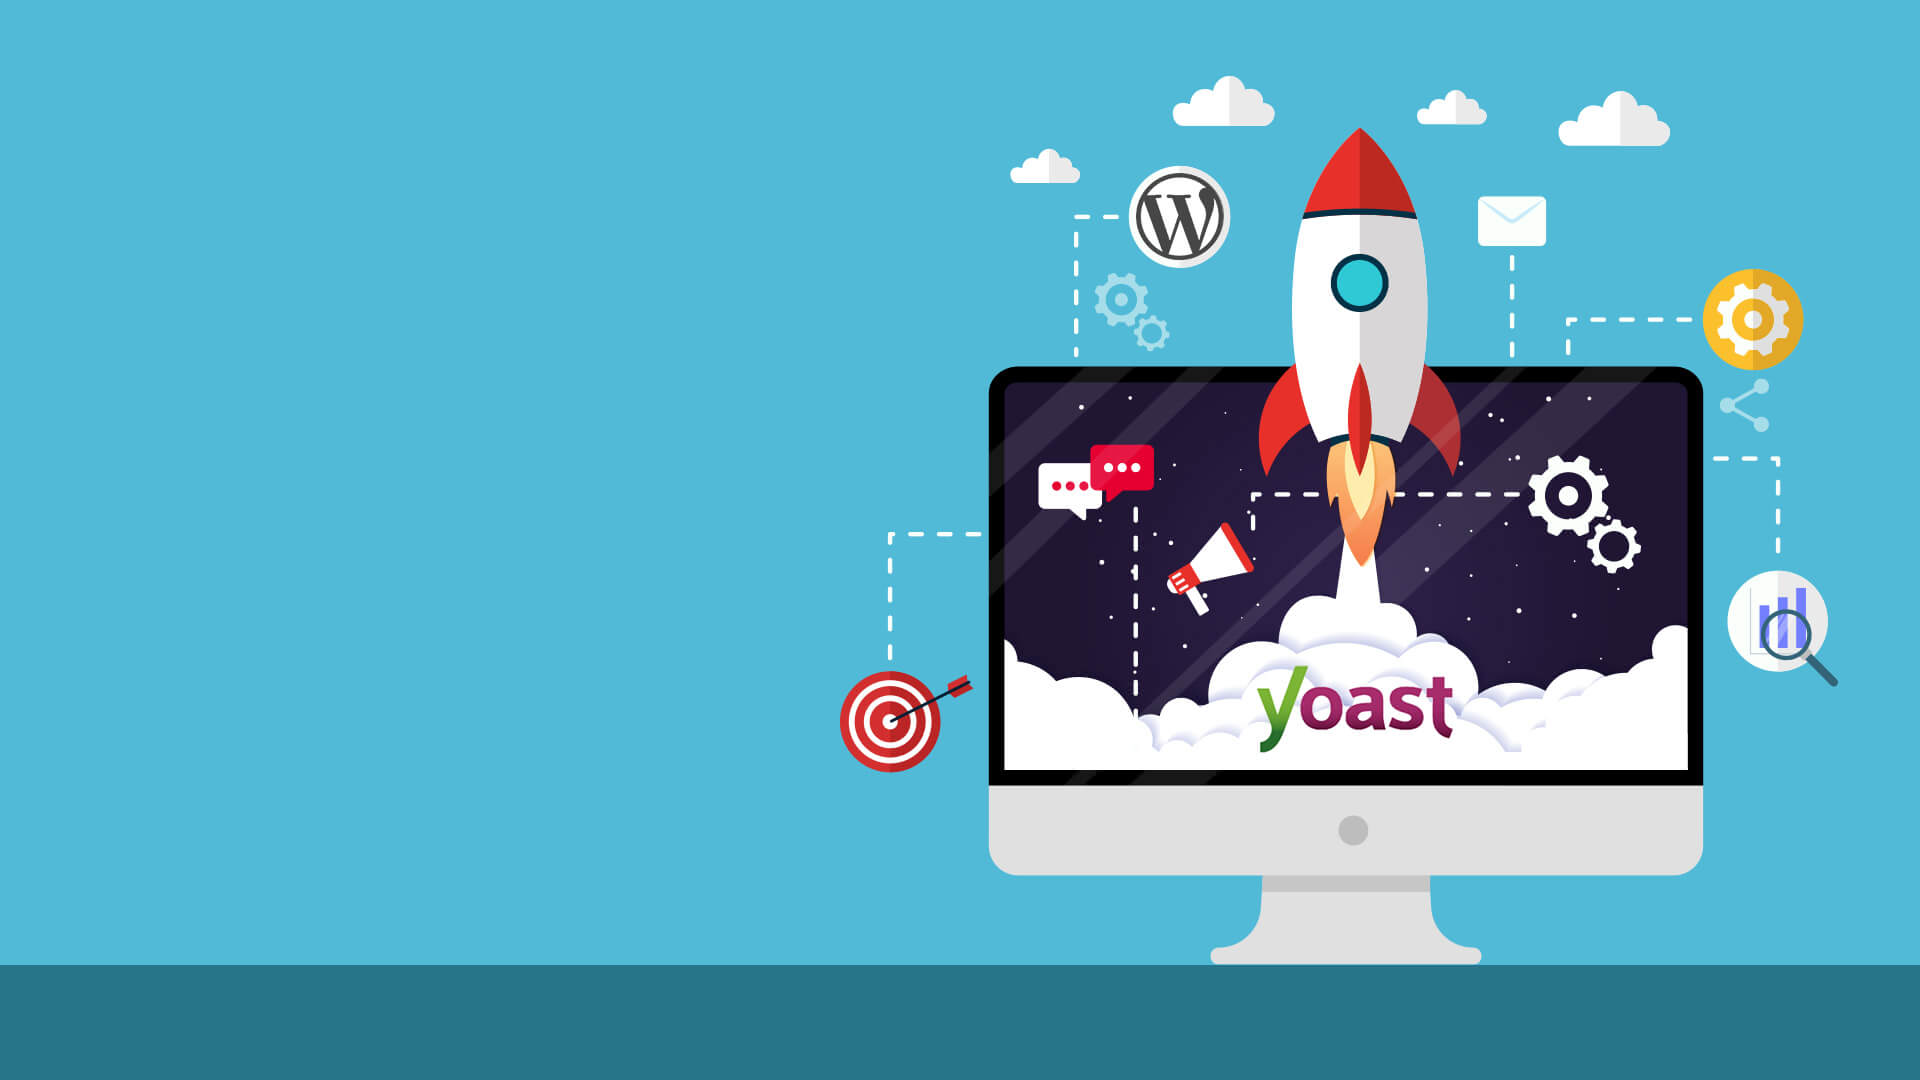 How to get Great WordPress SEO with the Yoast SEO Plugin